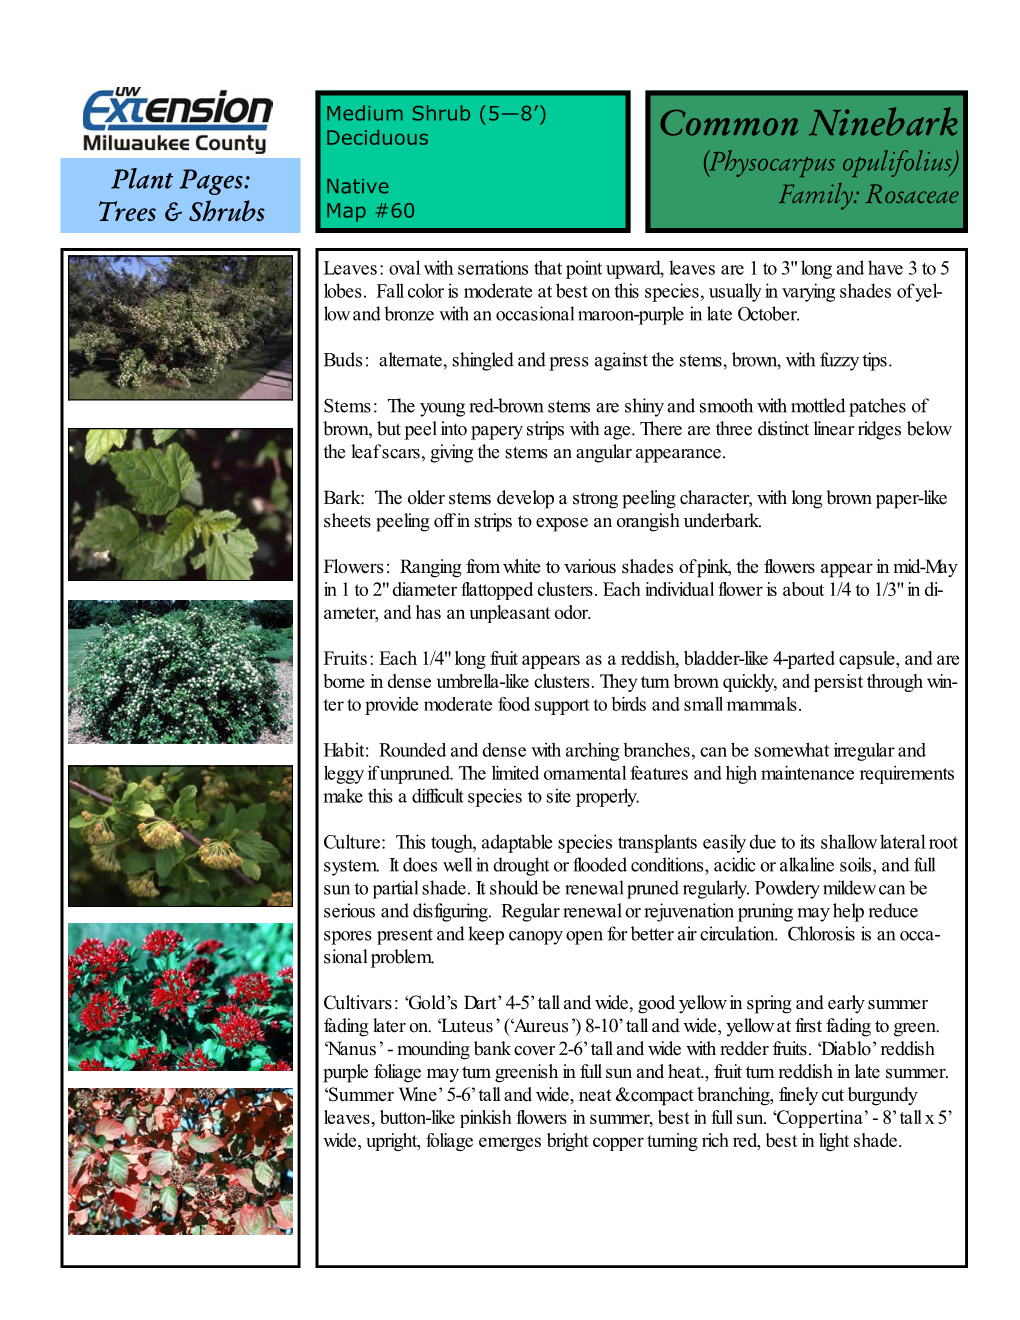 Common Ninebark (Physocarpus Opulifolius) Plant Pages: Native Family: Rosaceae Trees & Shrubs Map #60